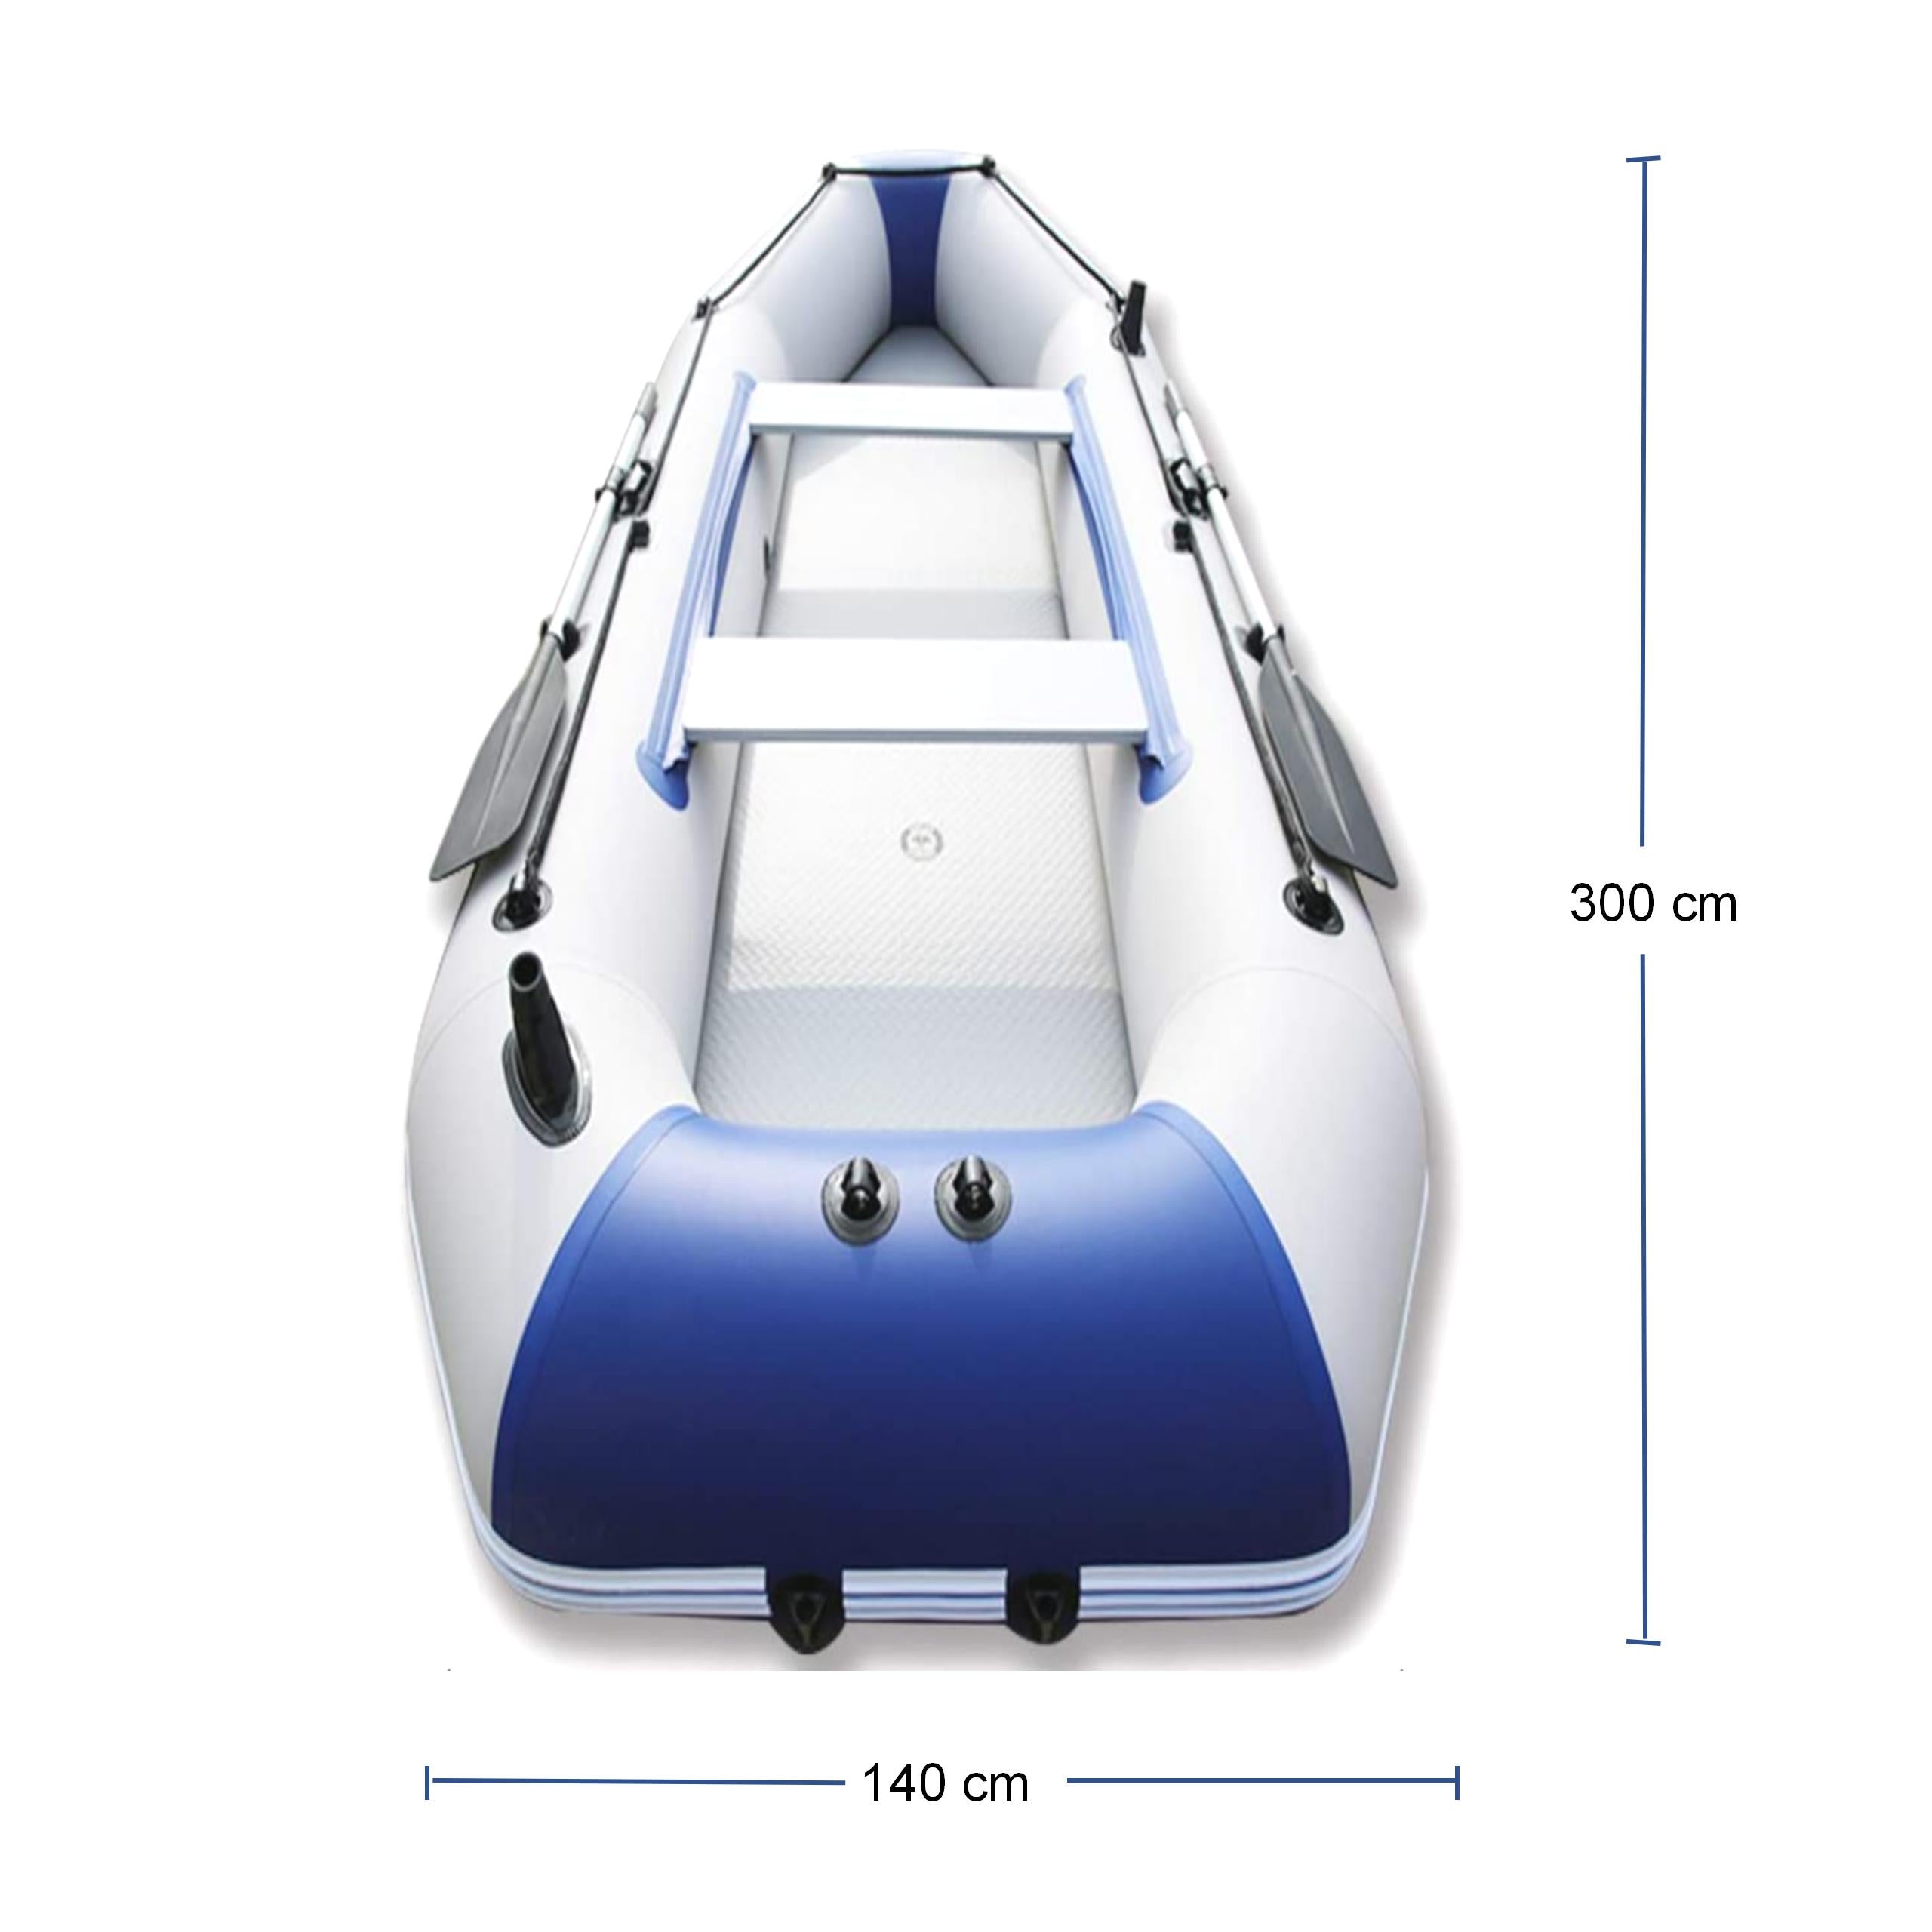 2.3M/3.0M/3.6M Inflatable Boats High Quality PVC Fishing Boats